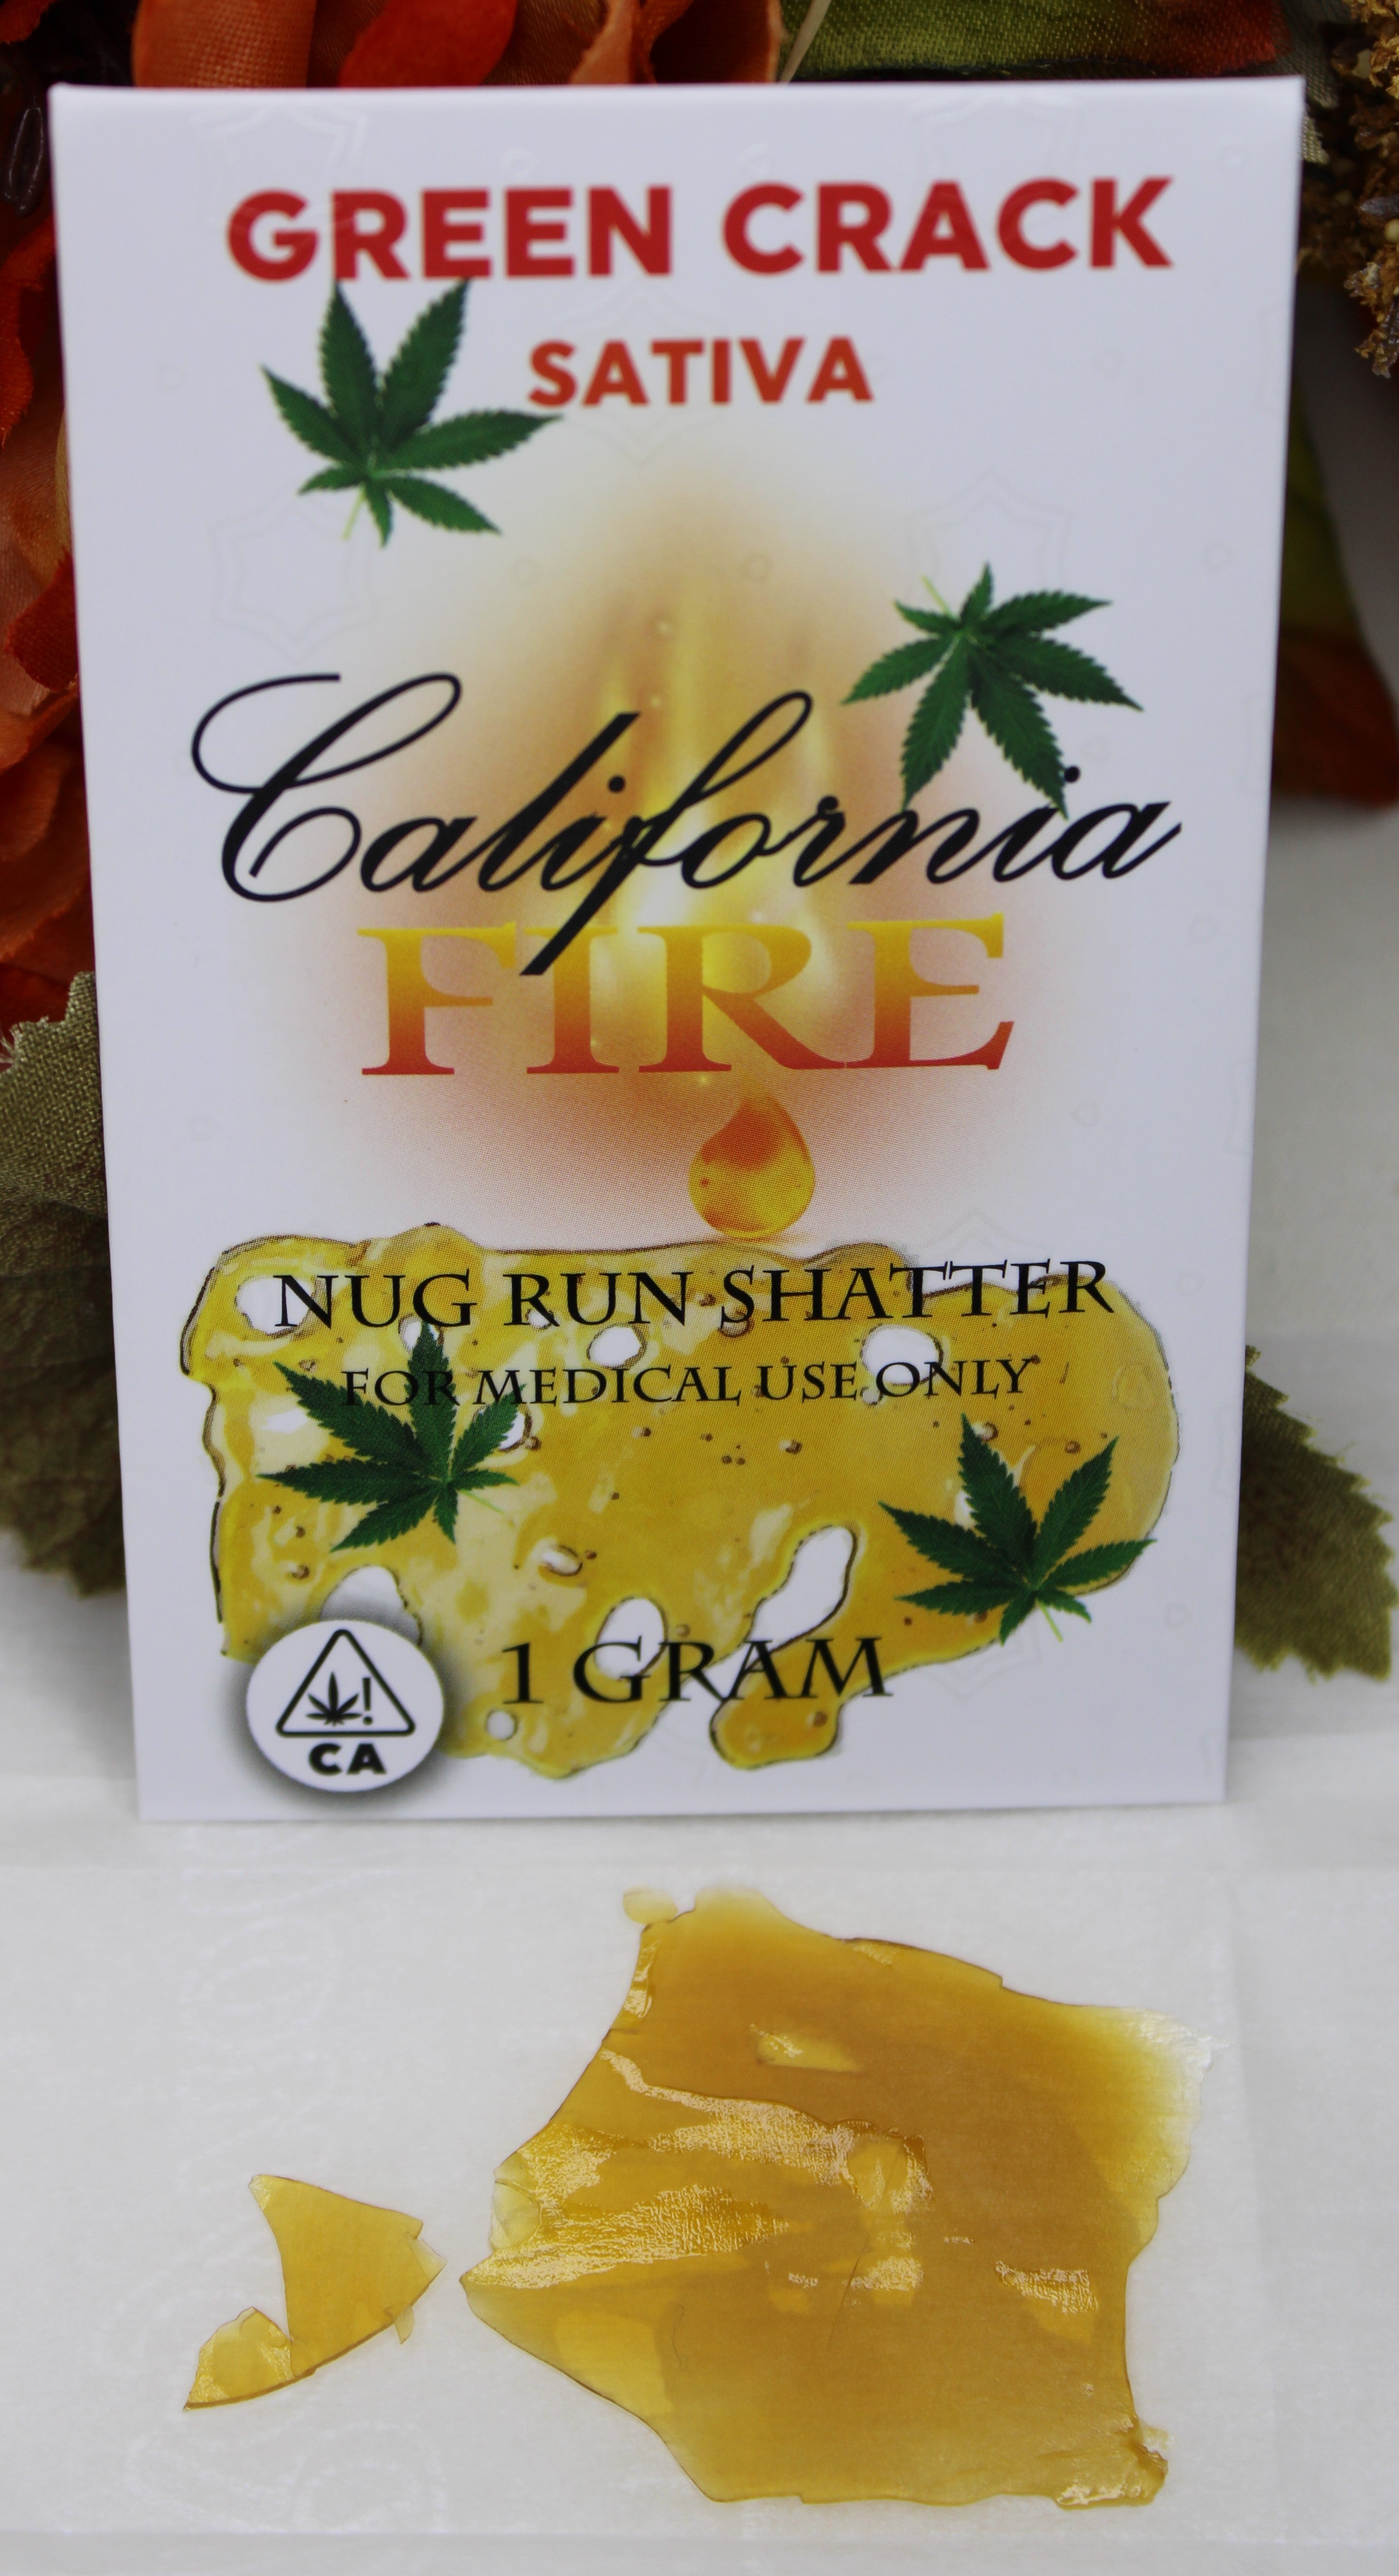 California Fire Nug Run Shatter "Green Crack" (1g)